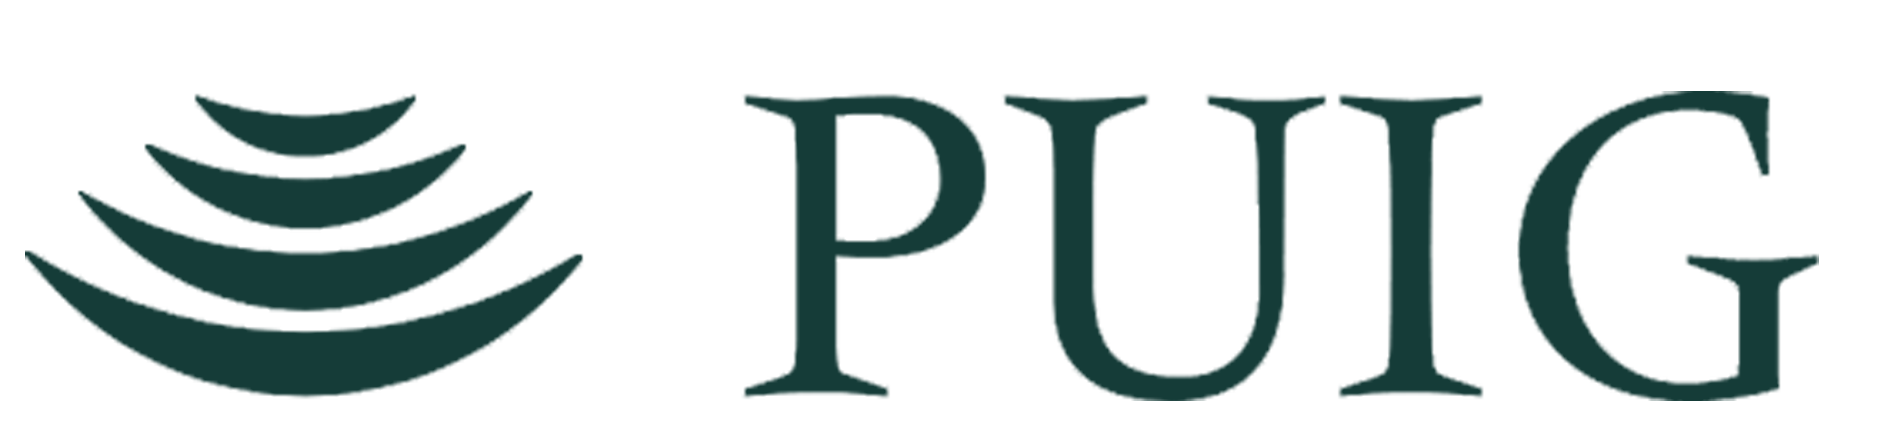 Puig logo.png